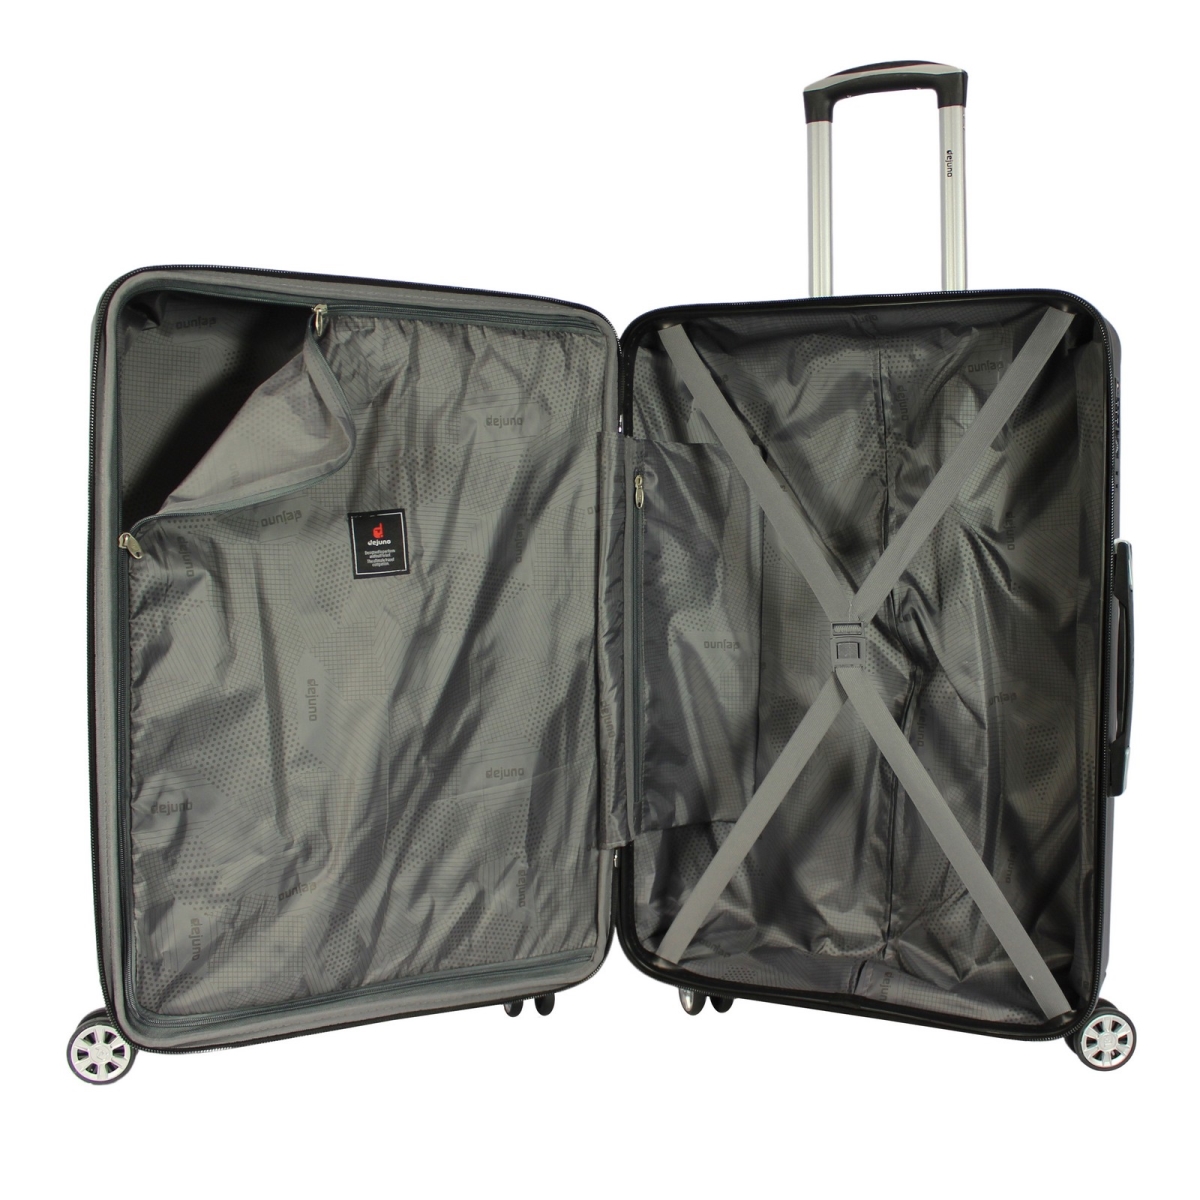 Picture of Dejuno 252015DJ-BURGUNDY Tutin Hardside Spinner Luggage Set with TSA Lock, Burgundy - 3 Piece